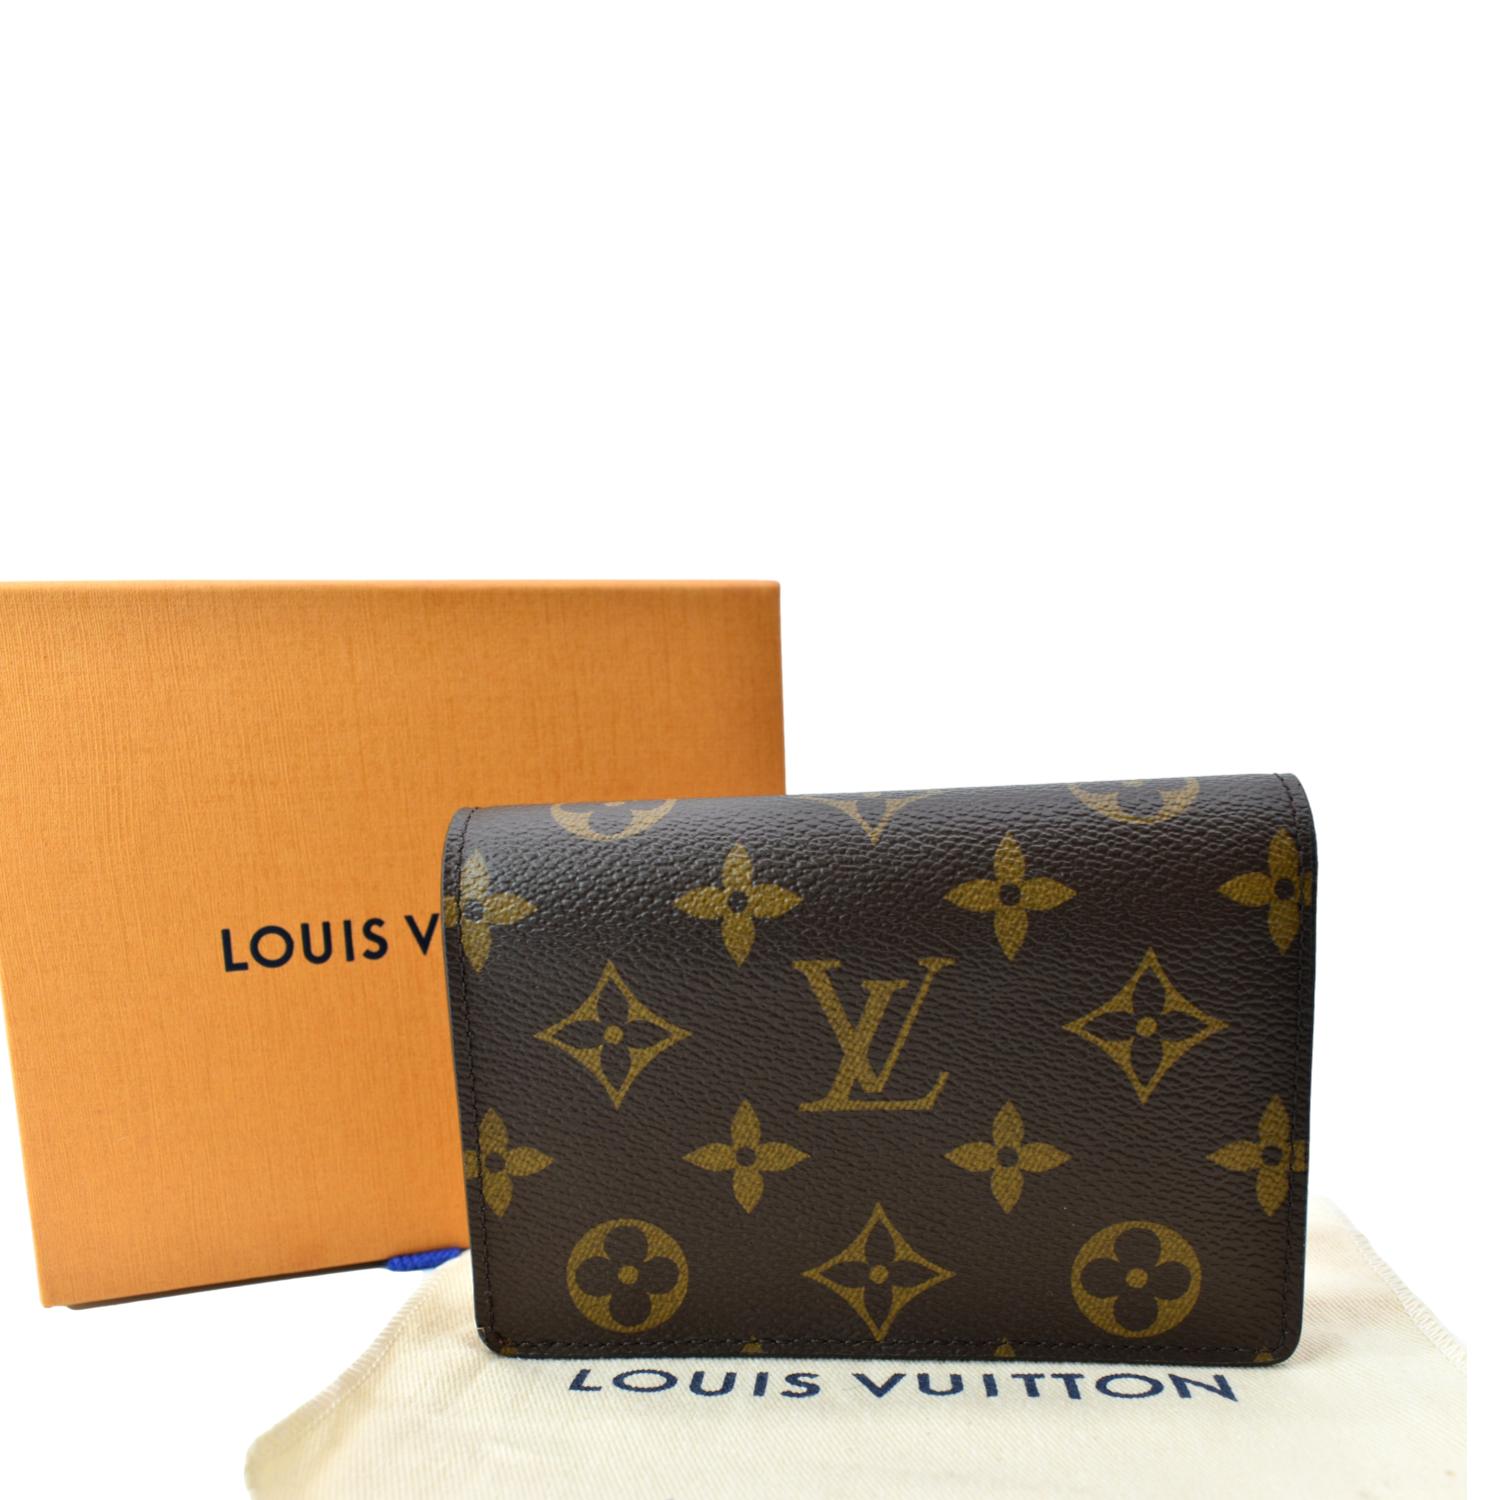 Louis Vuitton - JULIETTE WALLET